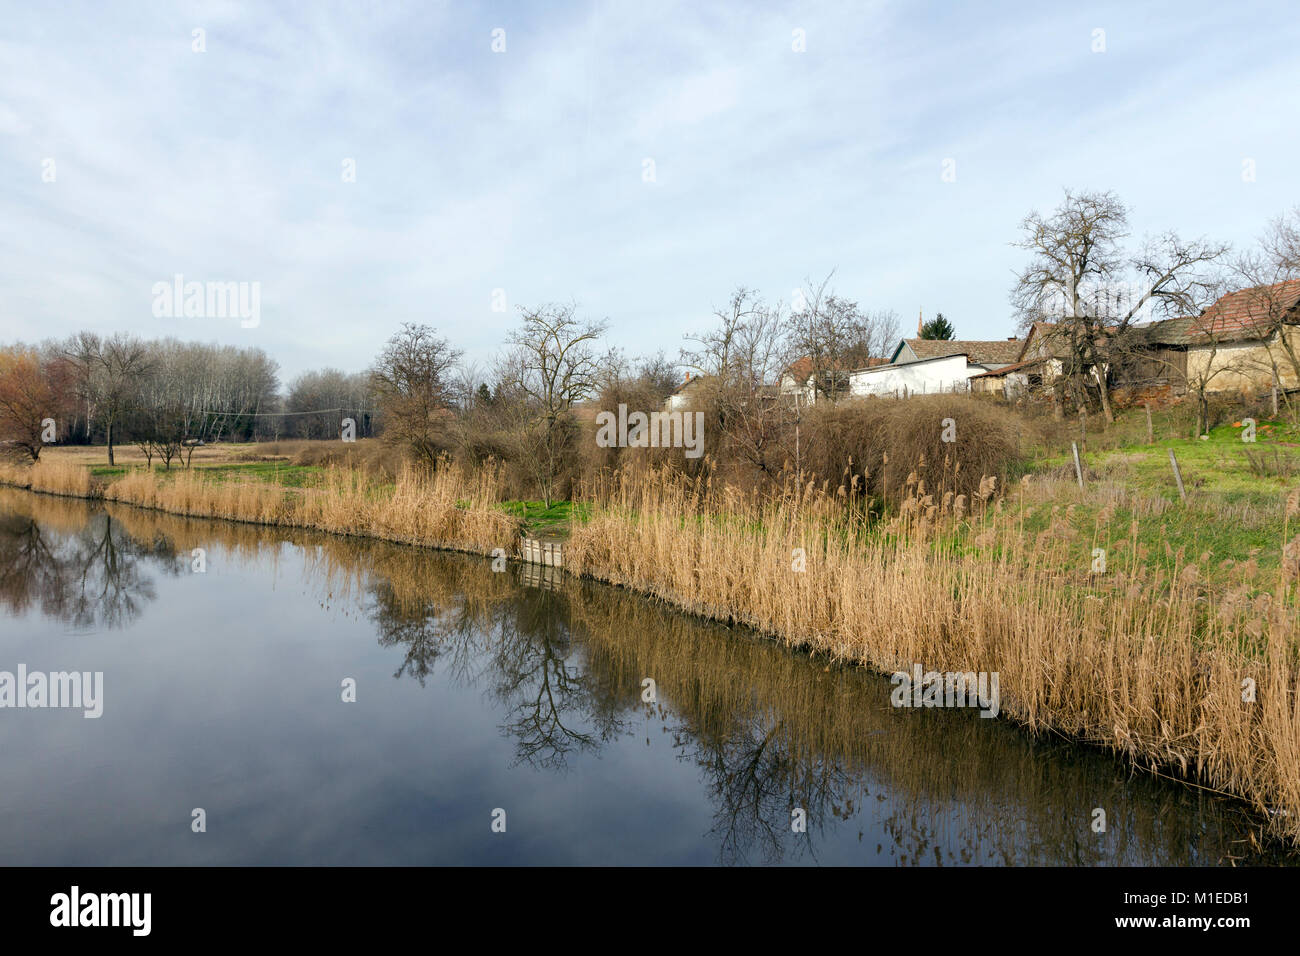 Kurca river in Szegvar village, Hungary. Stock Photo